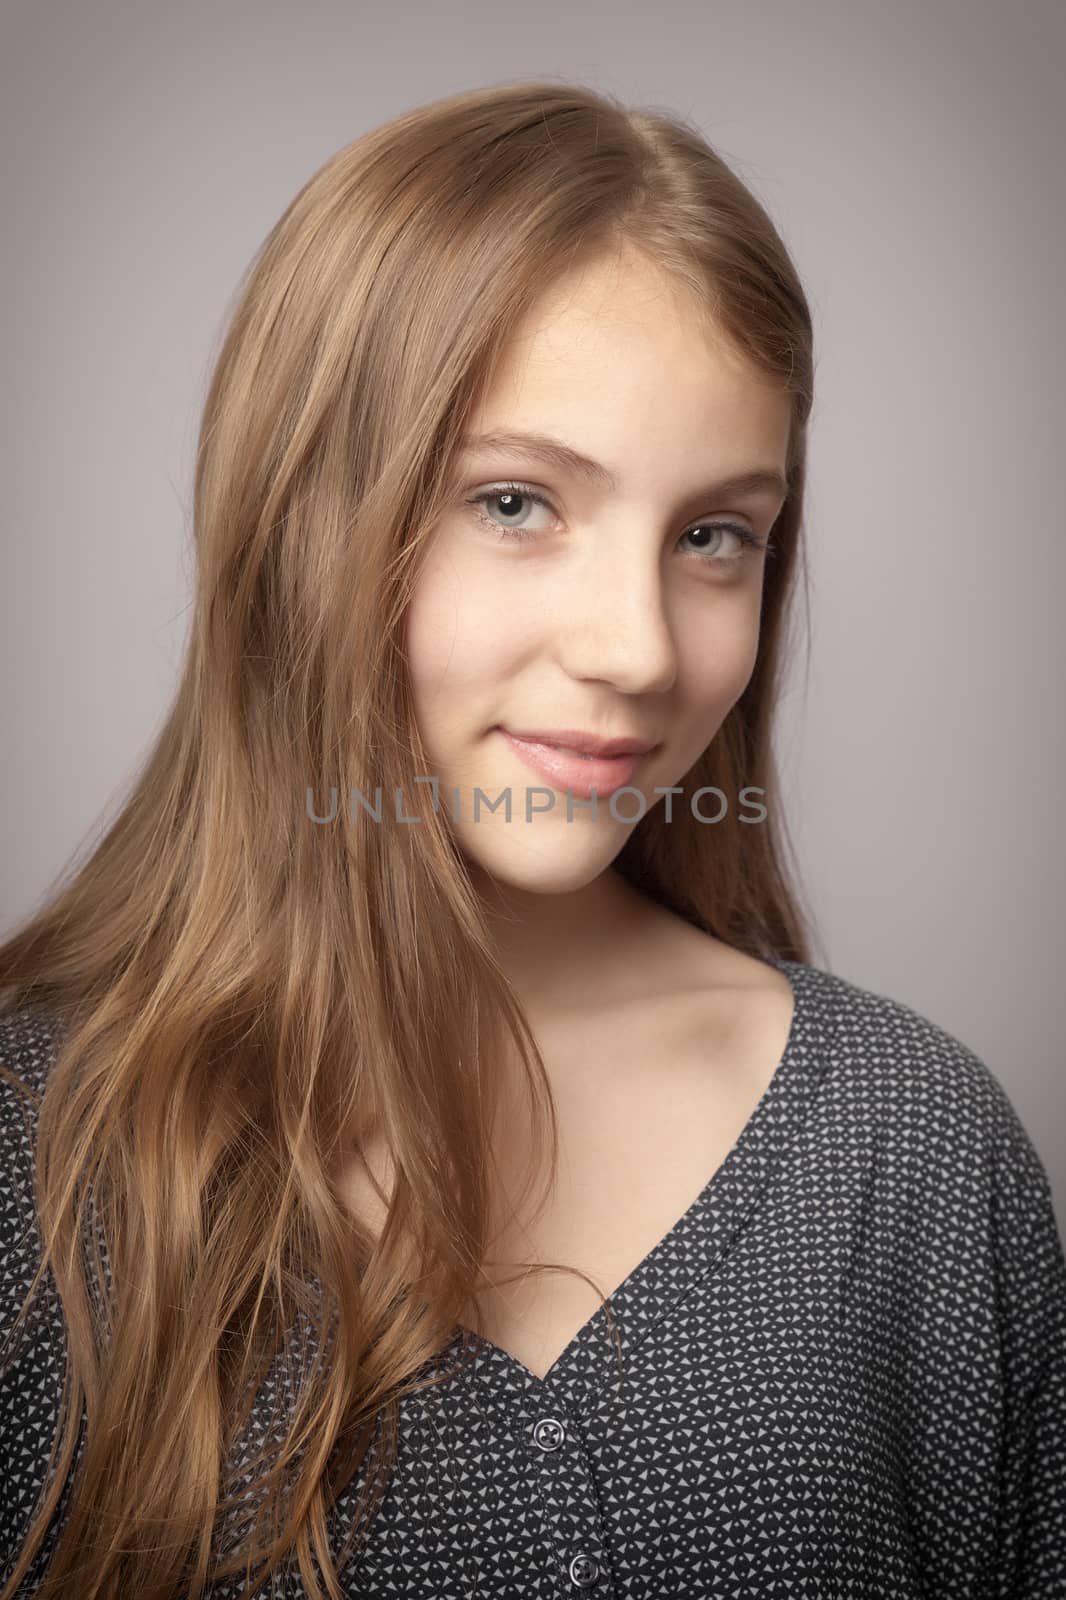 An image of a beautiful teenage girl